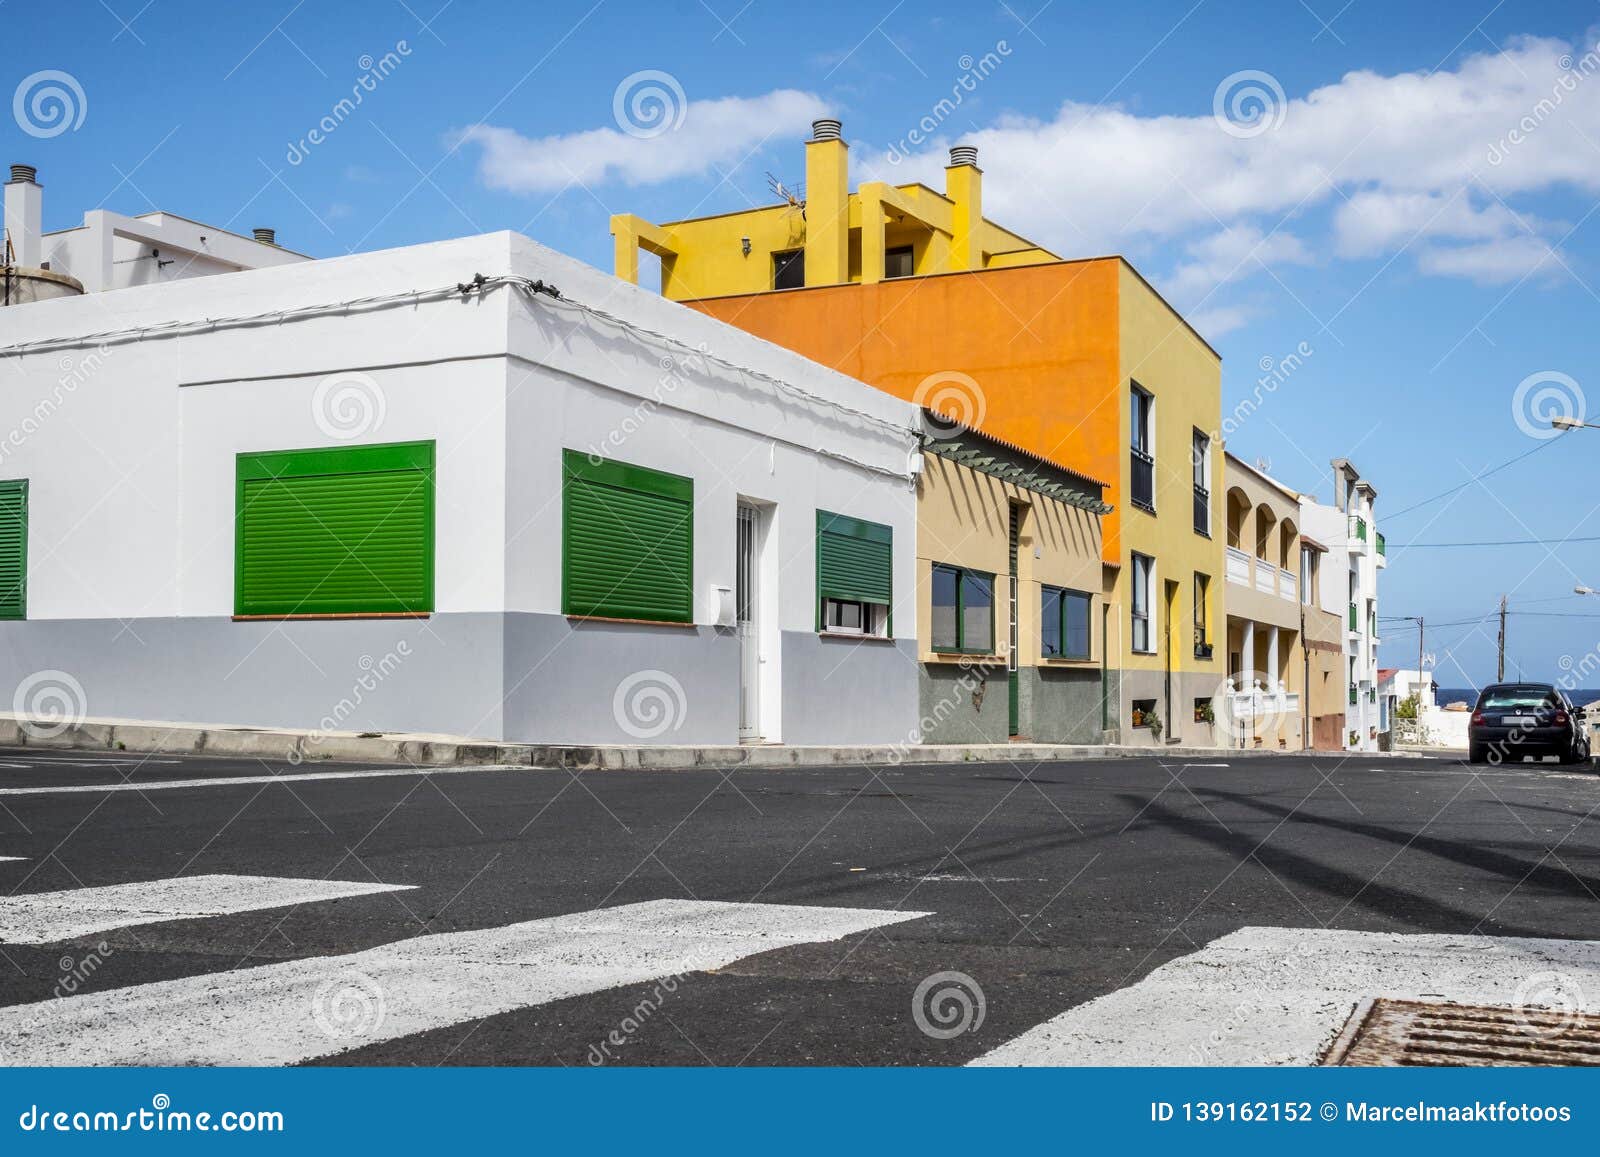 fresh painted houses in the streets of el tamaduste, el hierro, canary islands